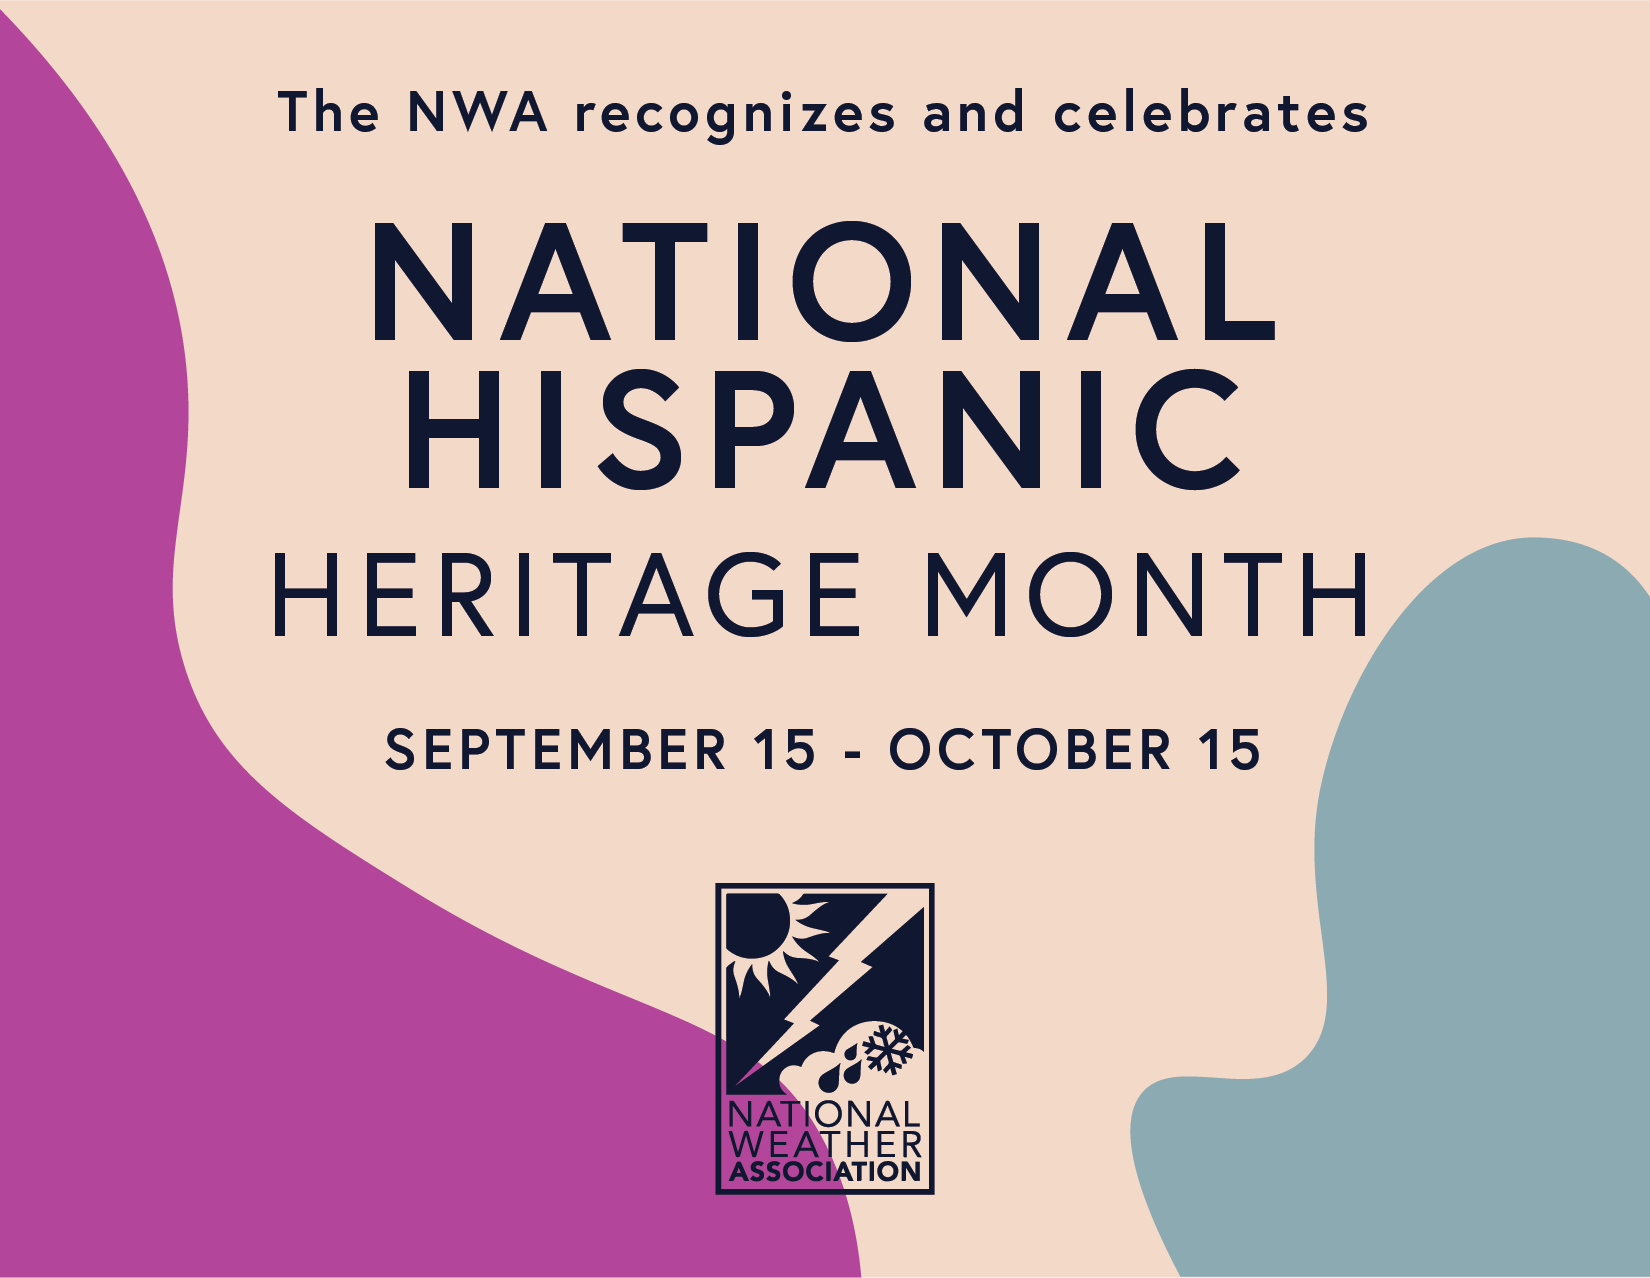 National Hispanic heritage month. september 15 through october 15